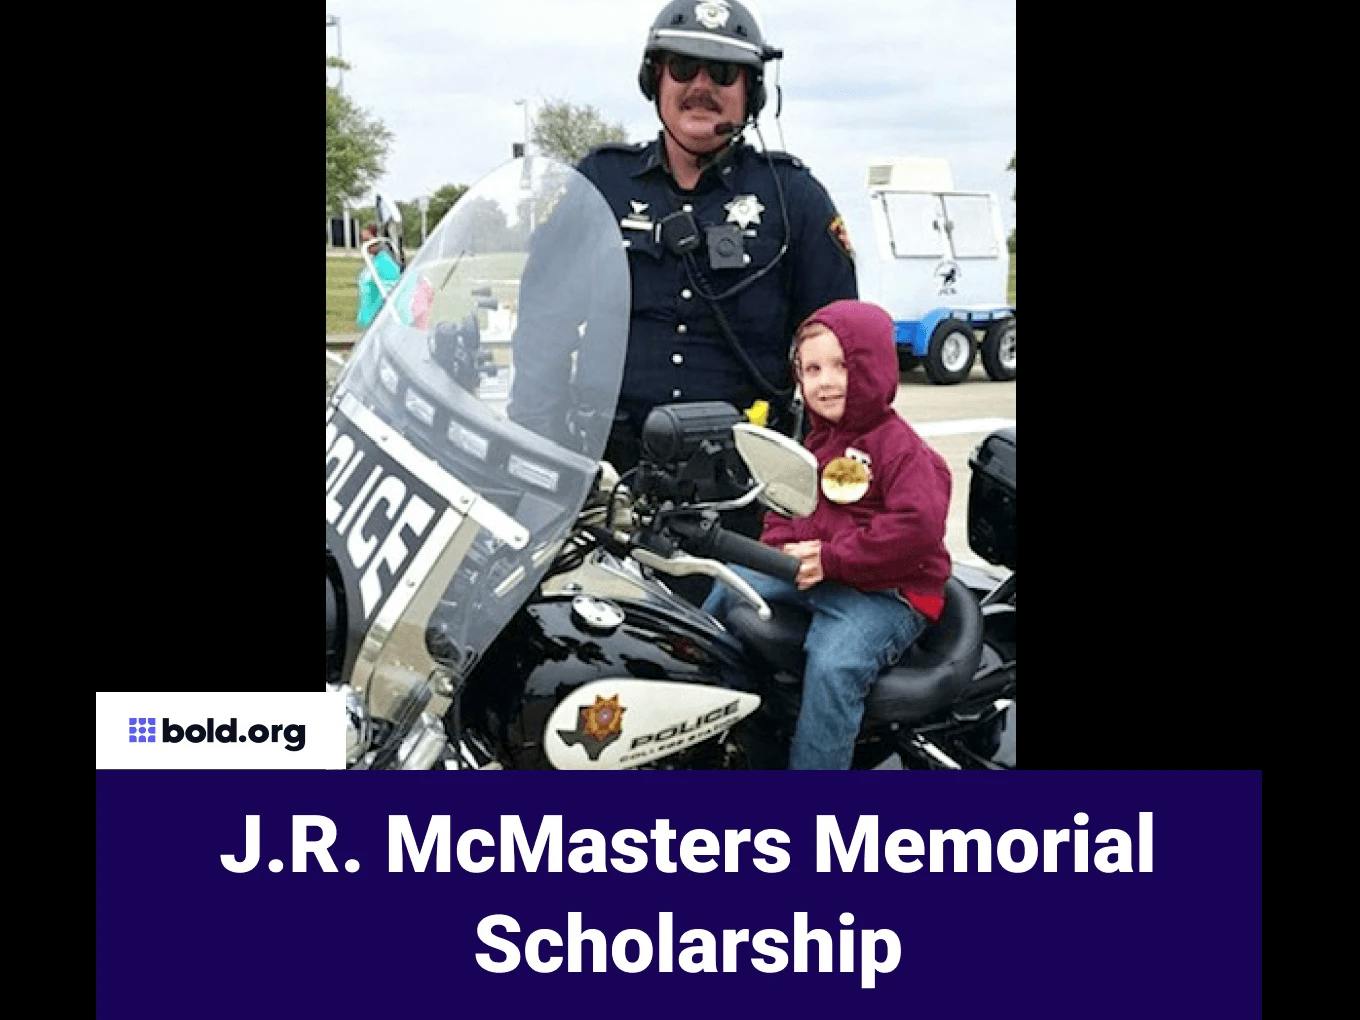 J.R. McMasters Memorial Scholarship